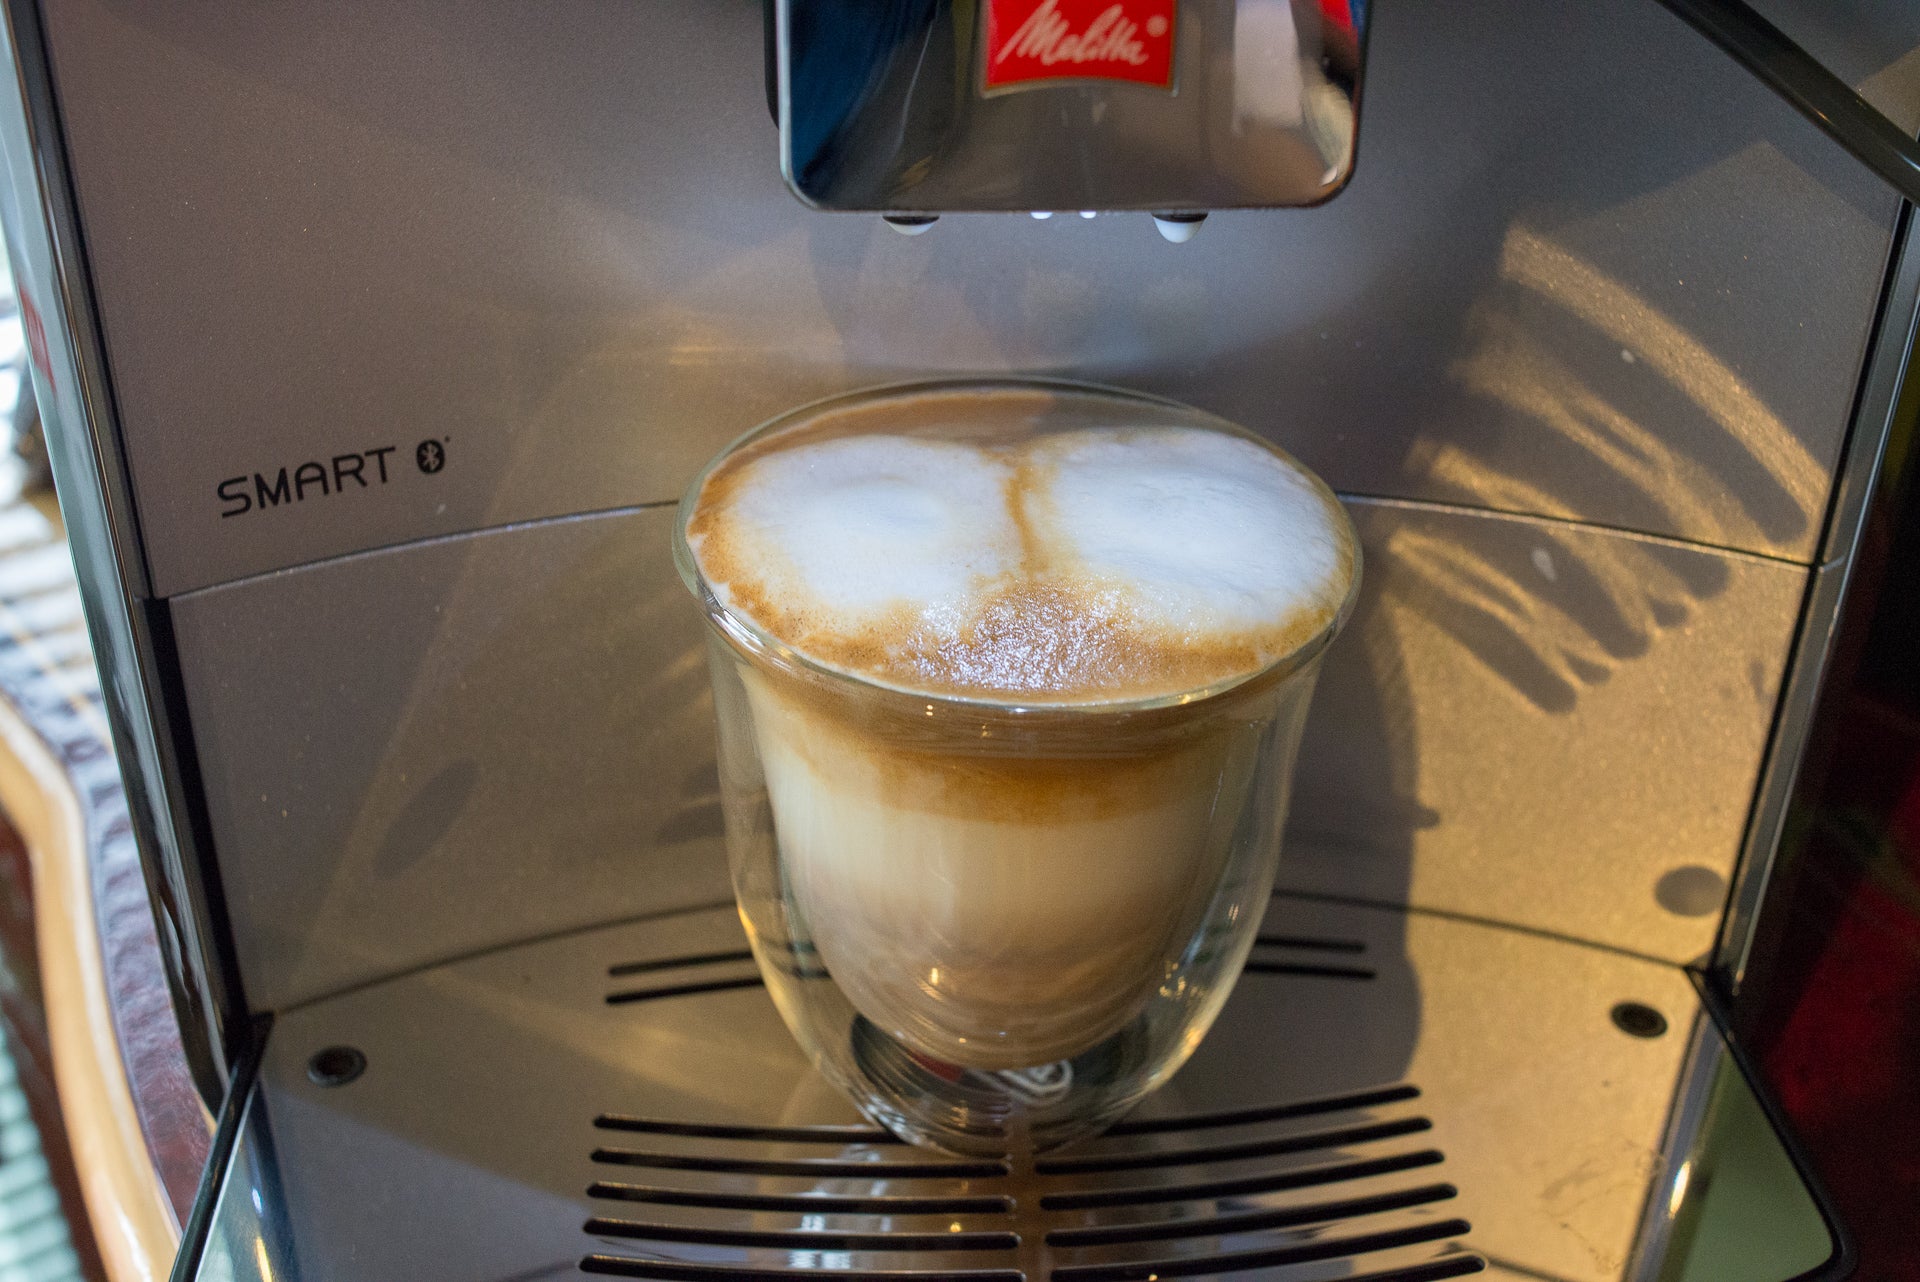 Melitta Caffeo Barista TS Smart with freshly brewed cappuccino.